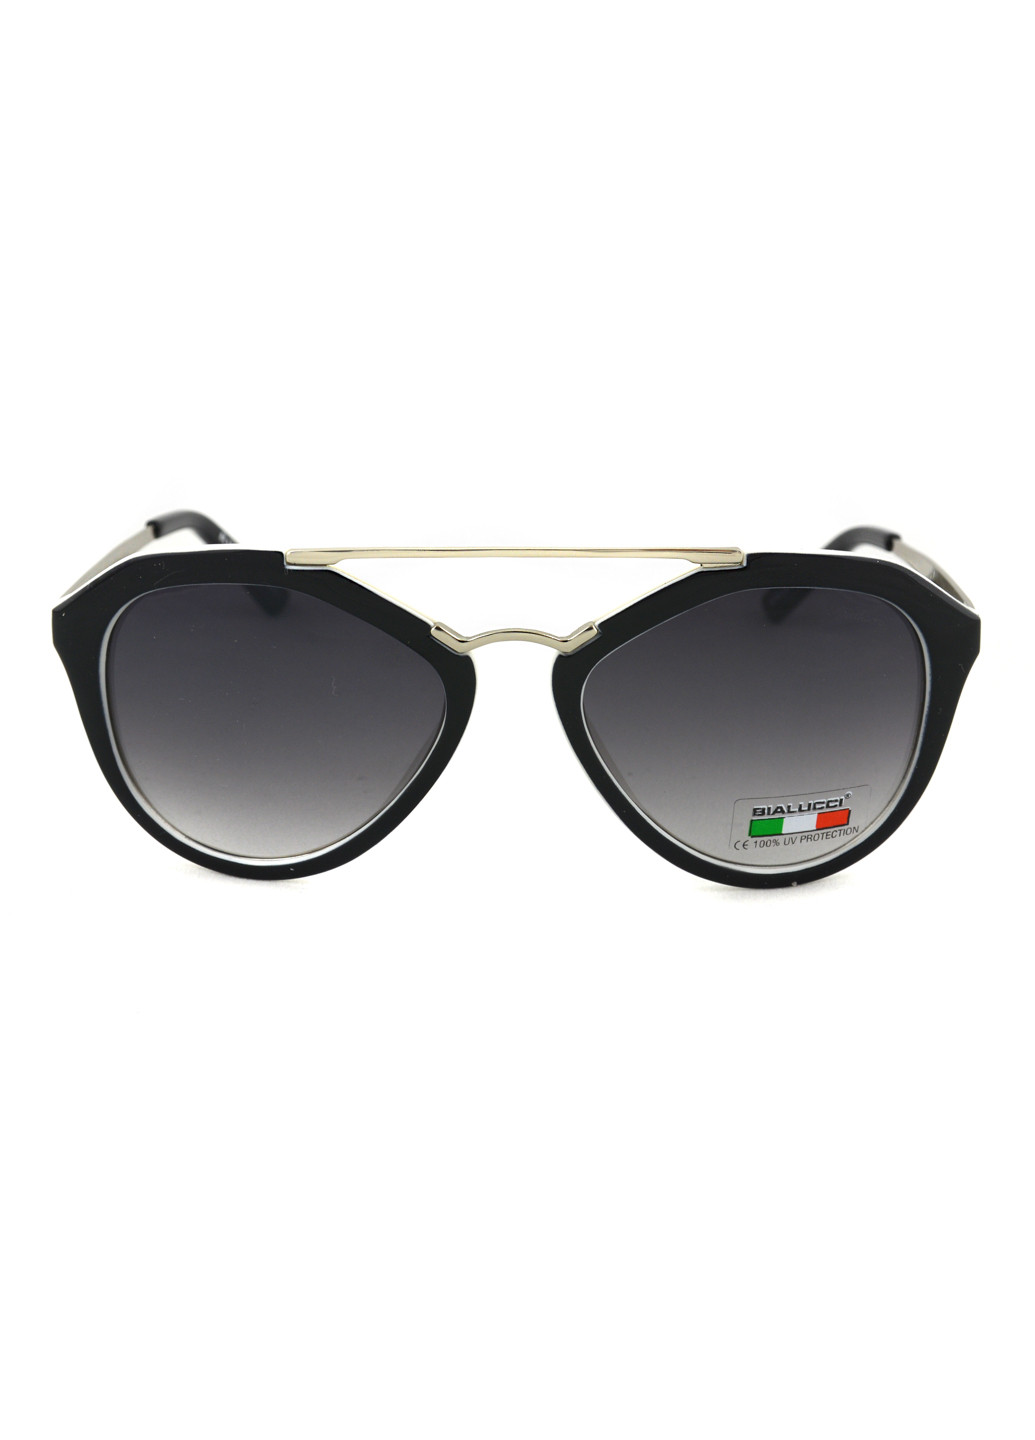 Солнцезащитные очки Bialucci (185097813)